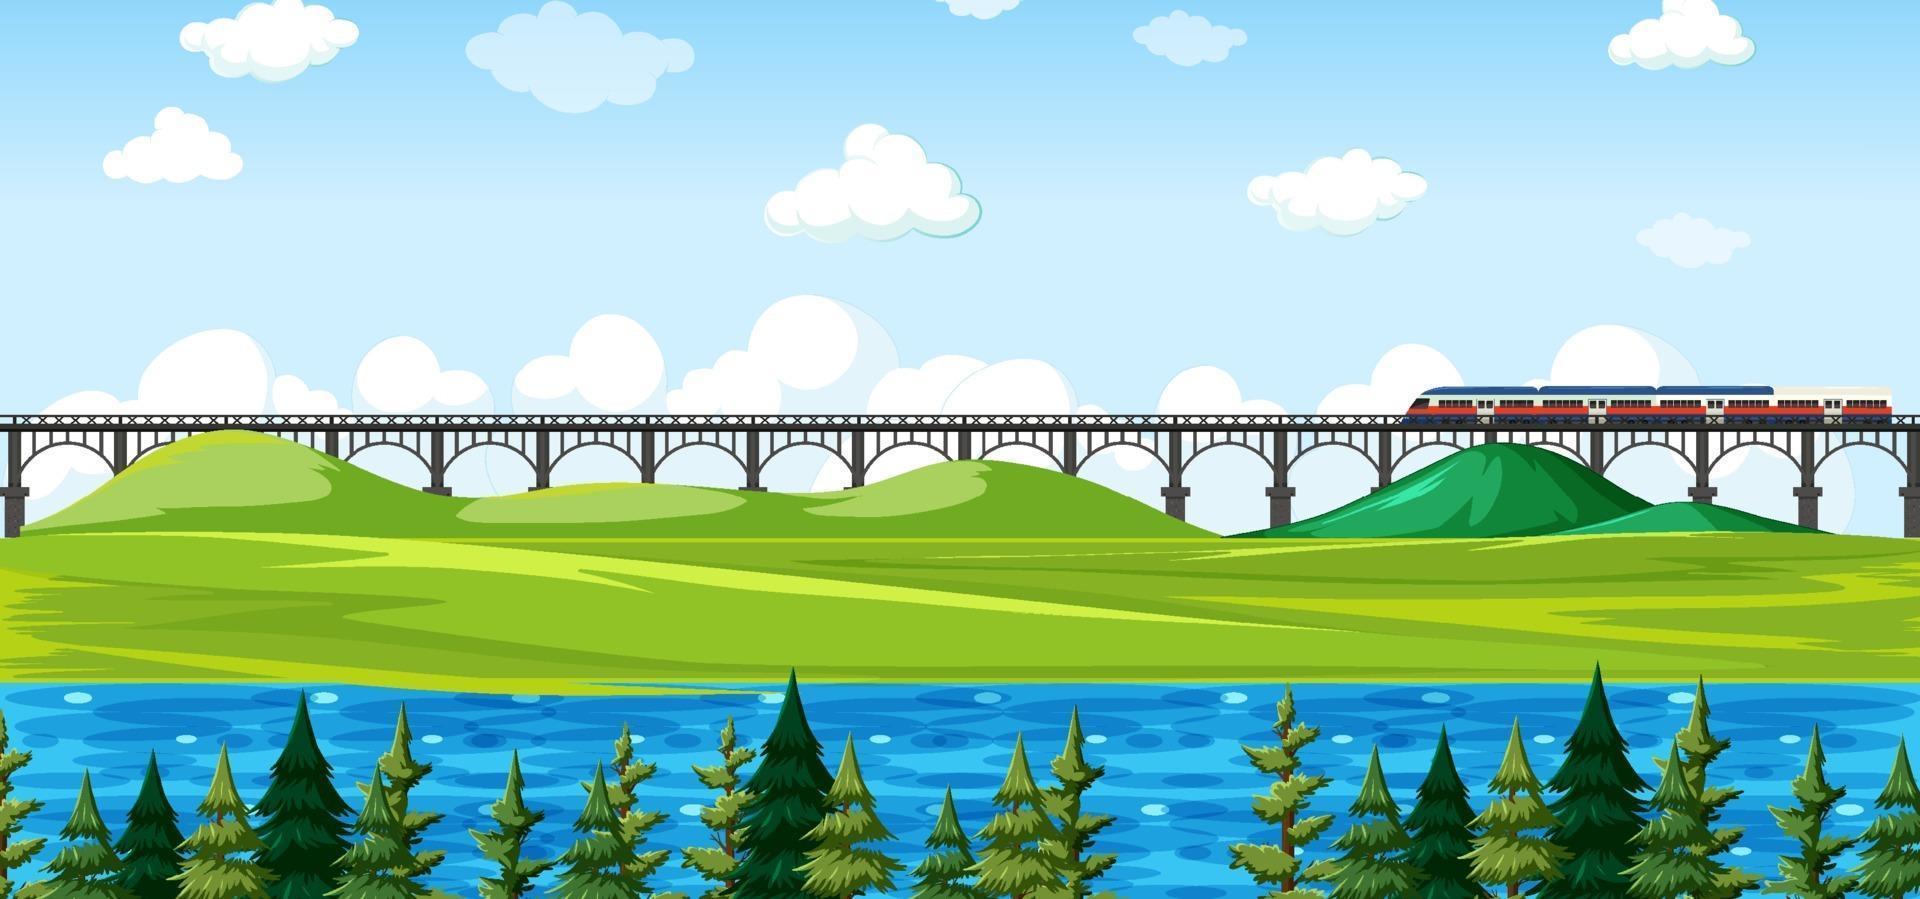 City nature park with train on skyline landscape scene vector